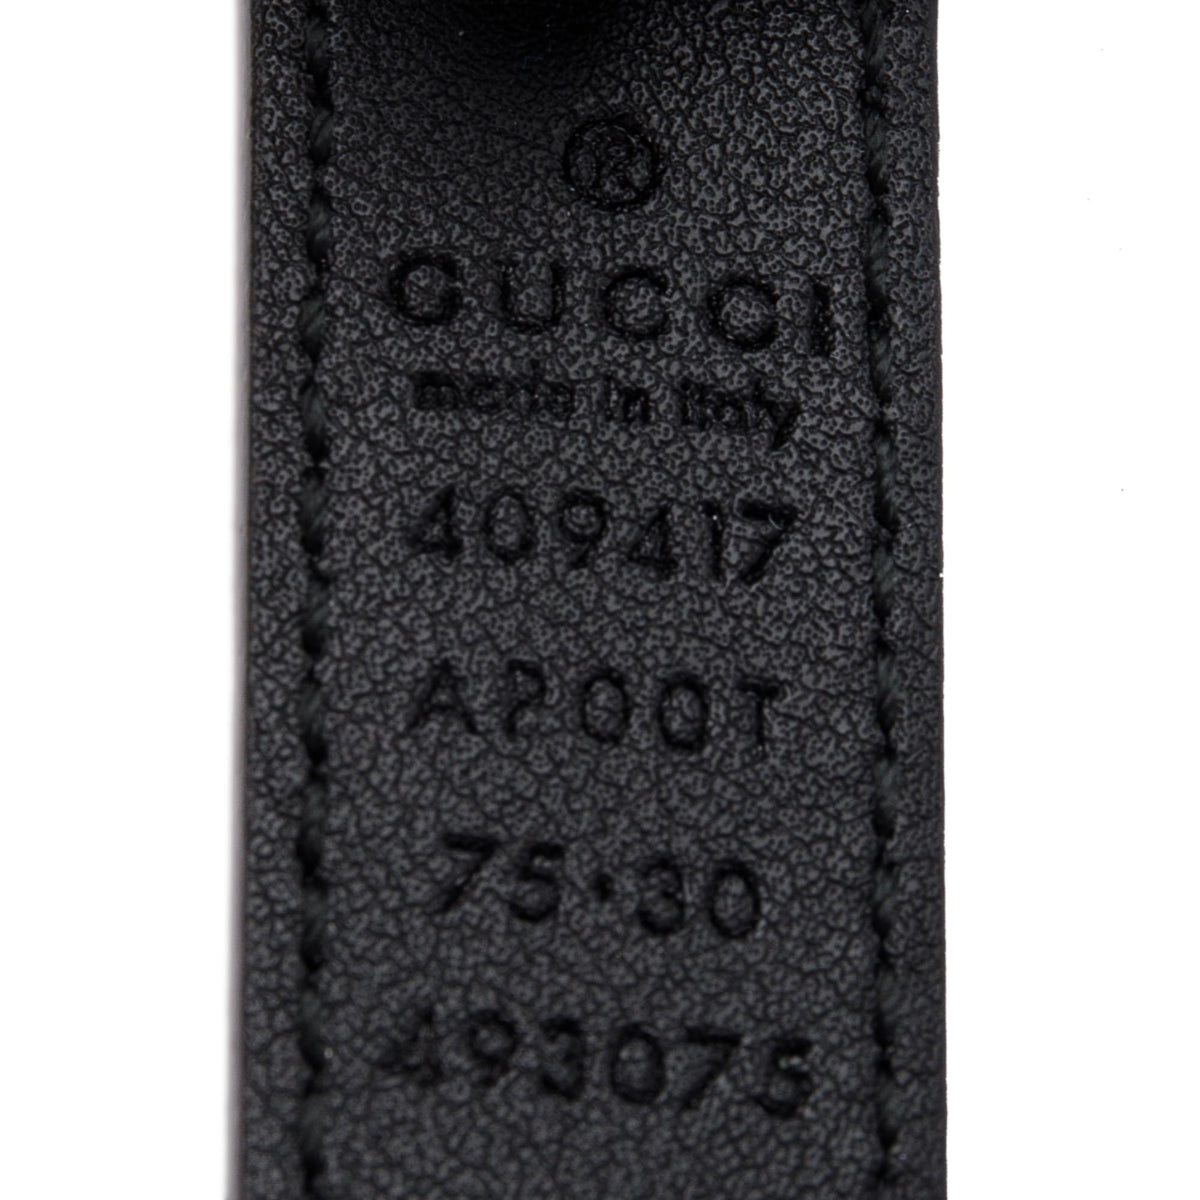 GUCCI Double G Buckle Leather Belt Black 409417